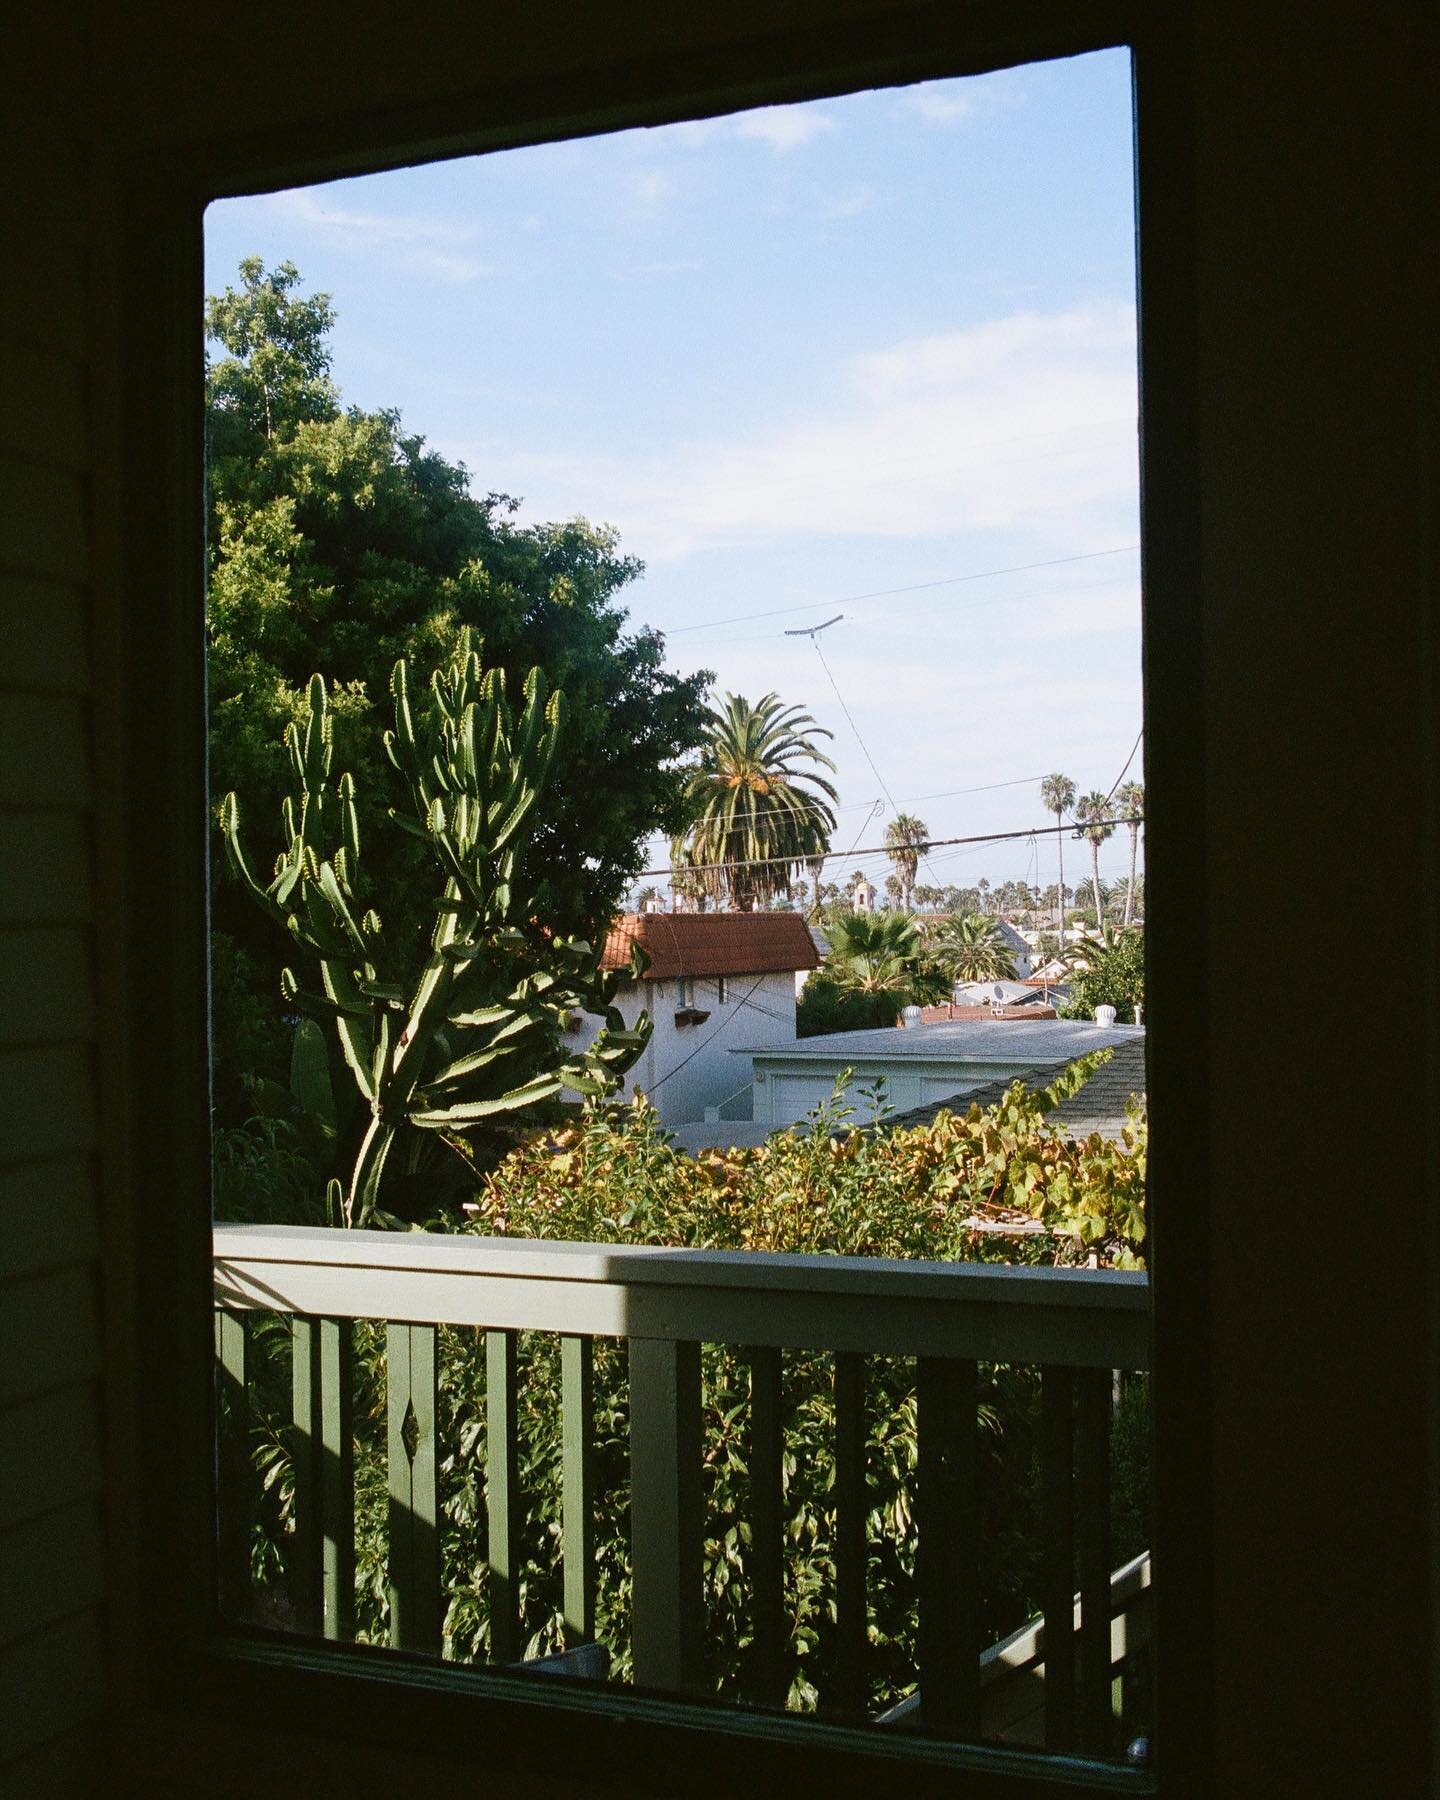 San Diego @ the cutest lil bungalow house back in 2019 shot on my Leica R4S 😄 

#leica #r4s #35mm #filmfilmfilm #shootfilmstaybroke